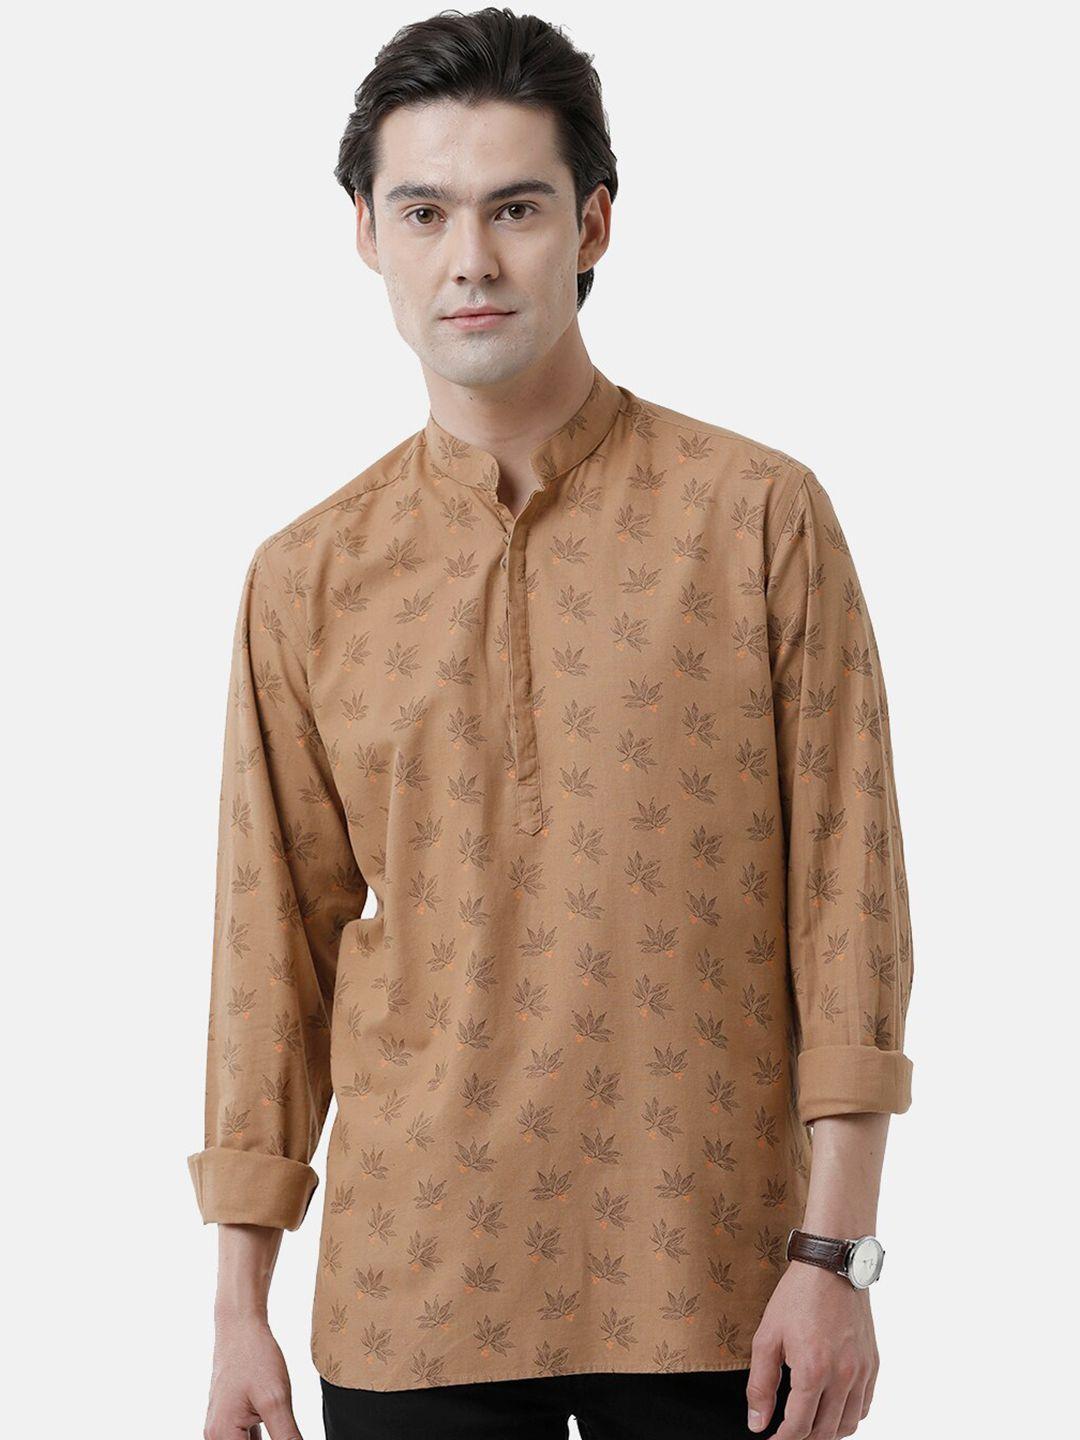 cavallo-by-linen-club-men-brown-linen-cotton-floral-printed-casual-shirt